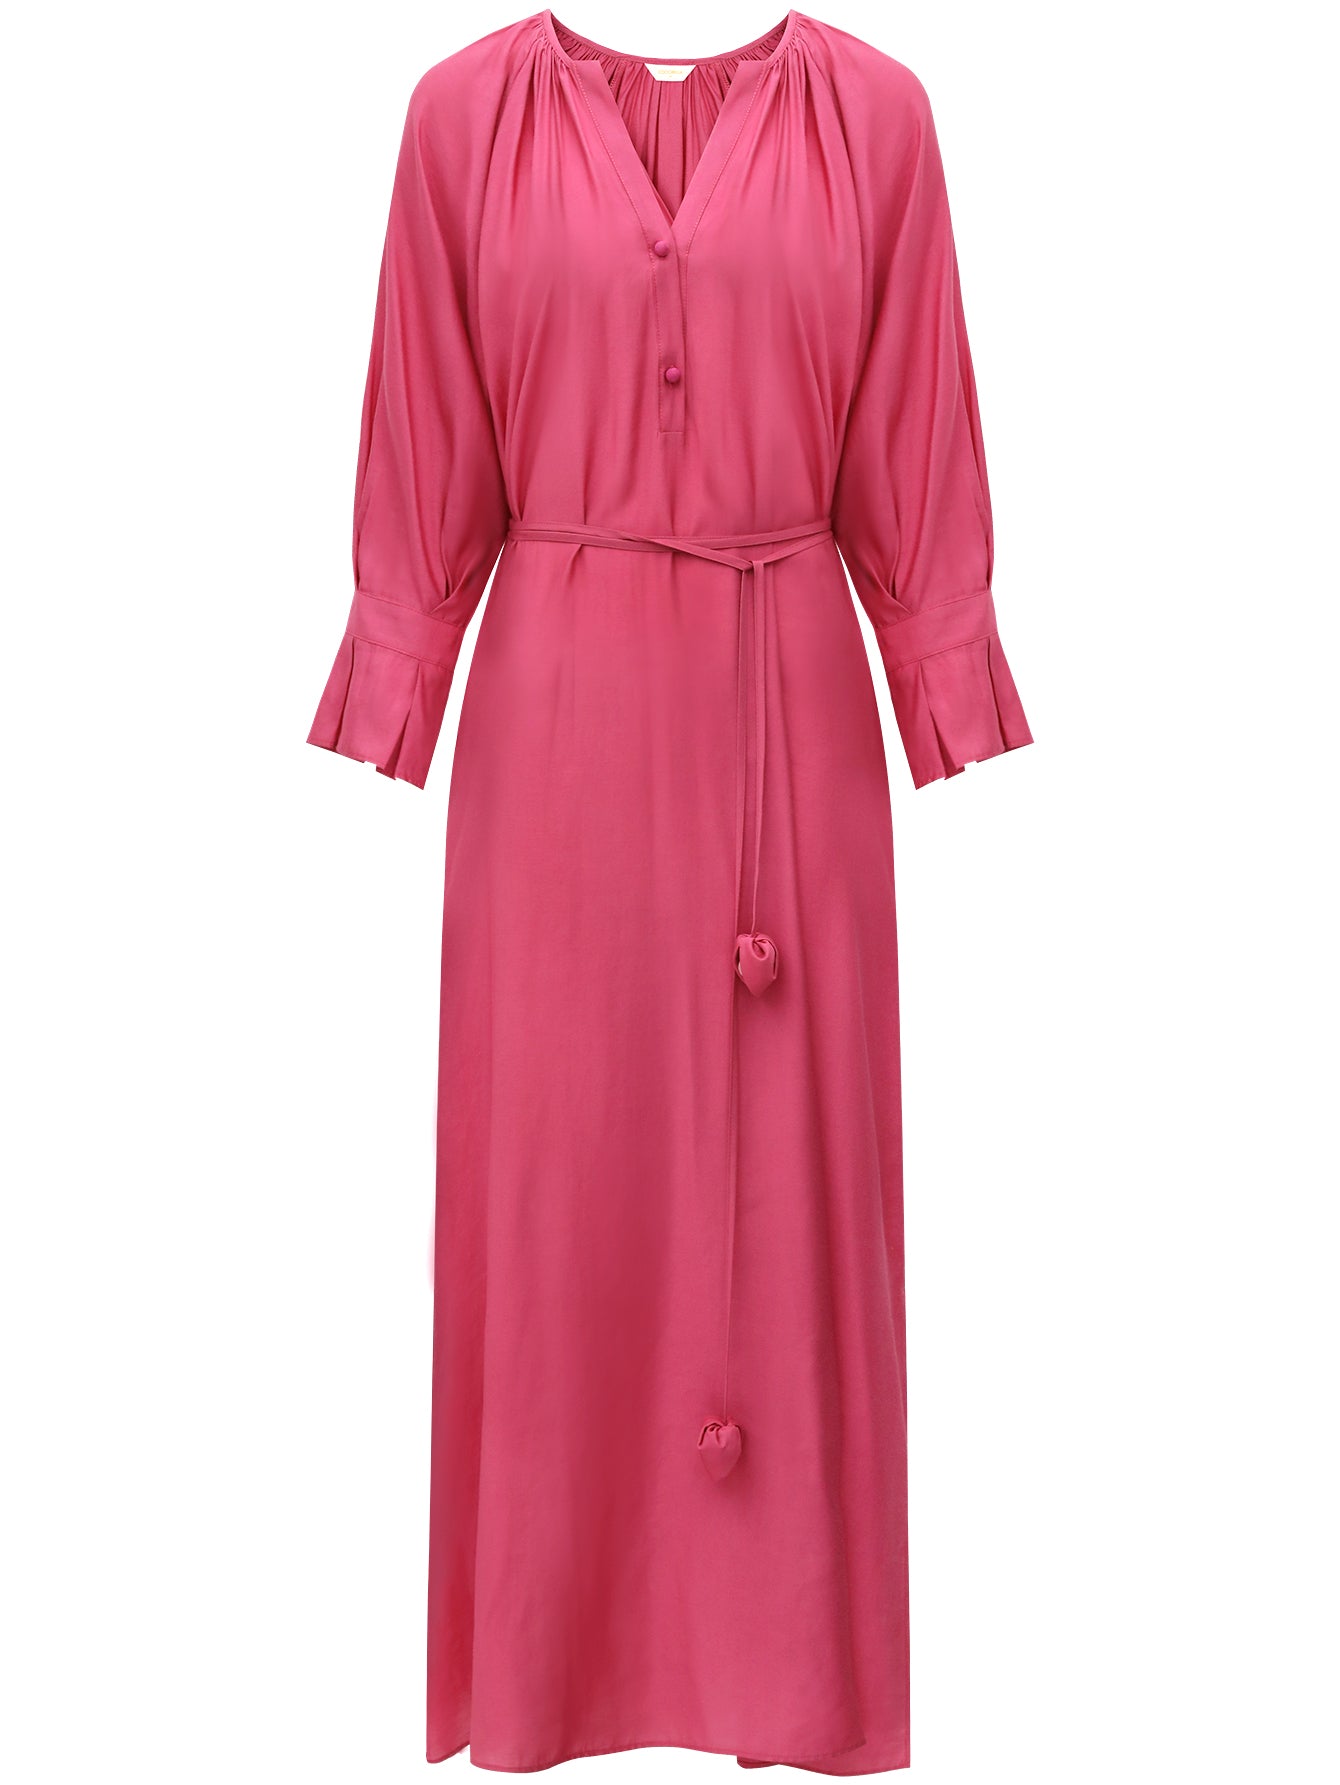 elegant-pleated-rosebud-pink-blossom-shirt-dress_all_pink_4.jpg